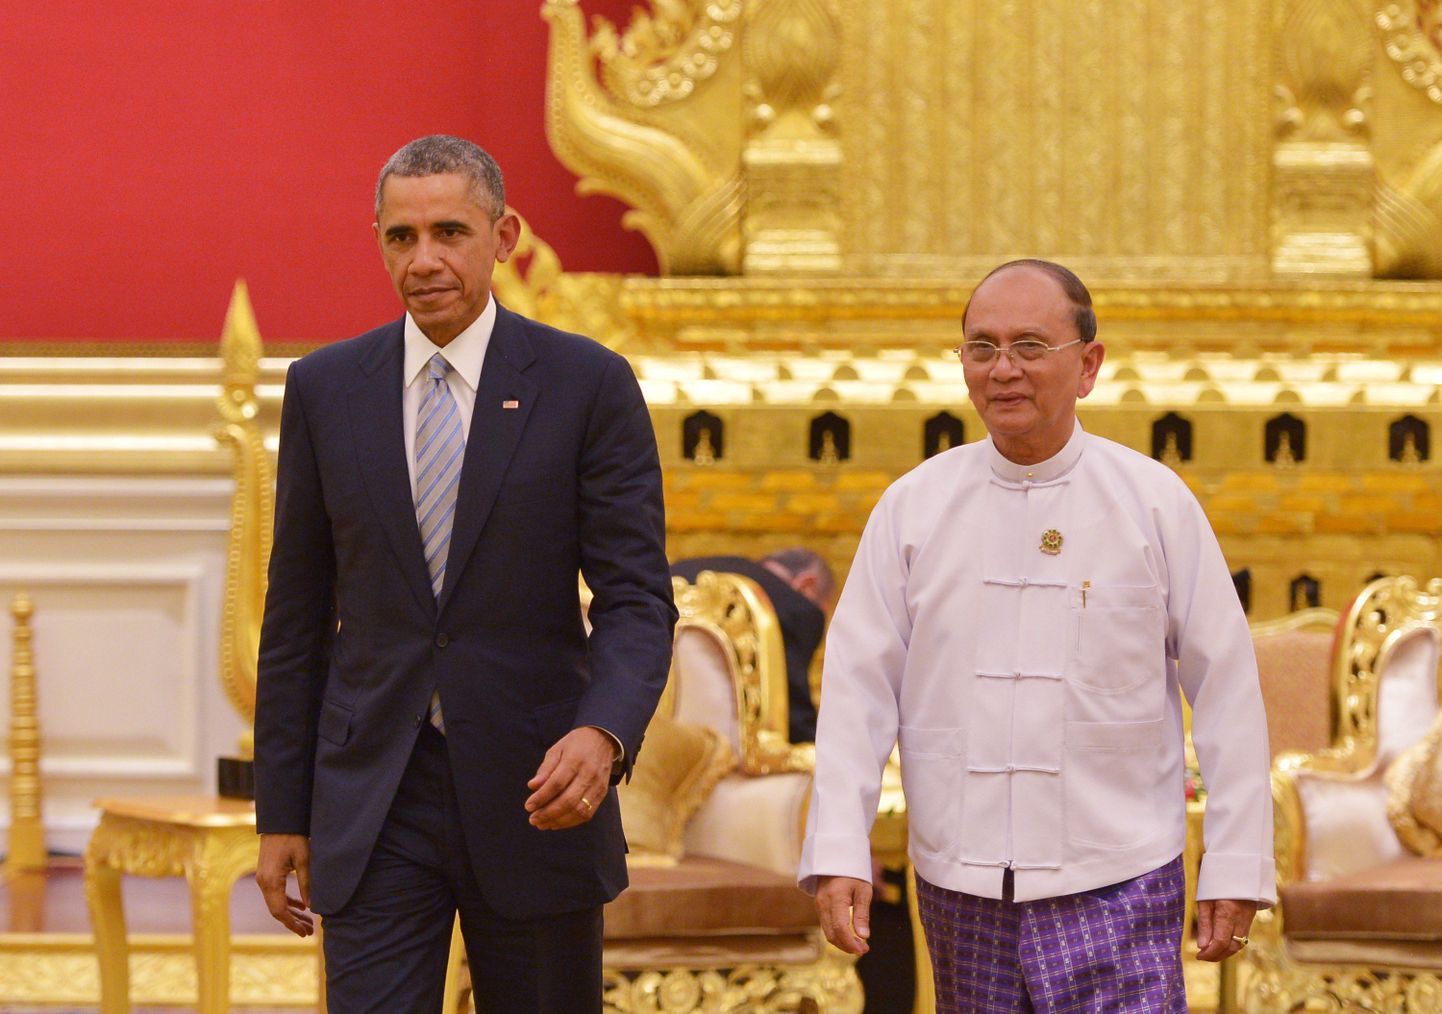 USA president Barack Obama kohtus neljapäeval Birma presidendi Thein Seiniga riigipea palees pealinnas Naypyidaw's.